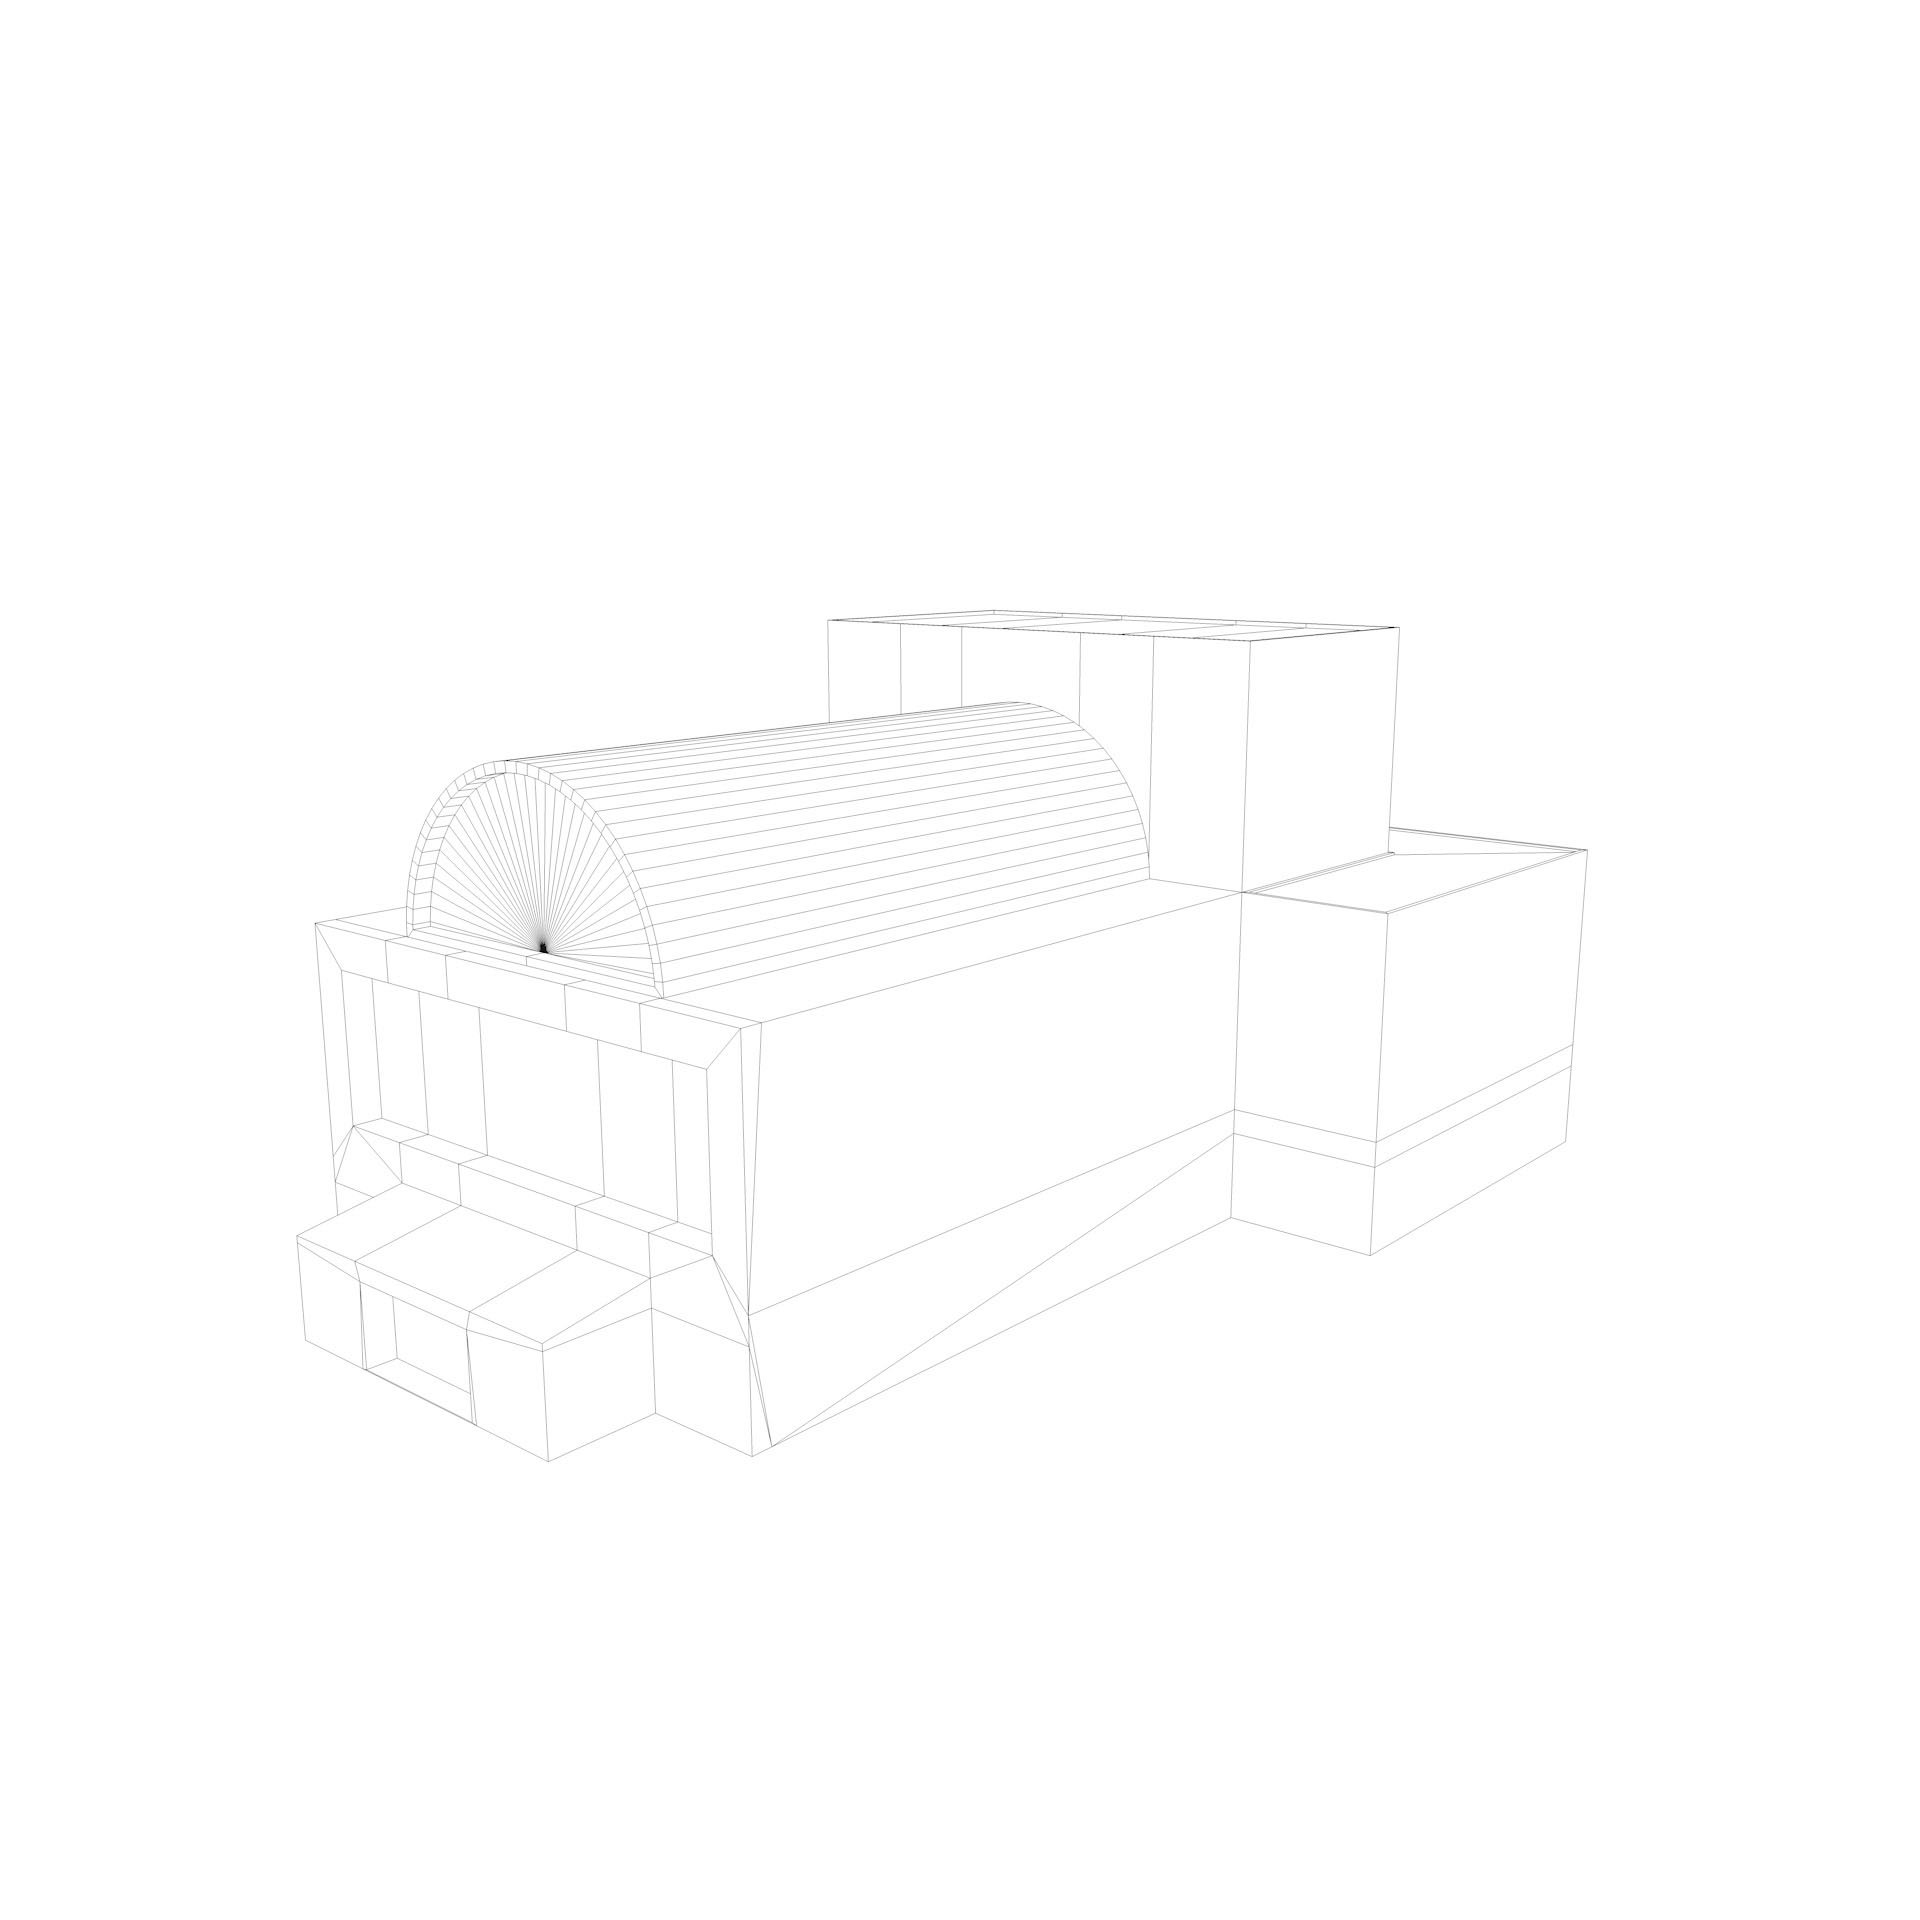 3Д модел цртане куће